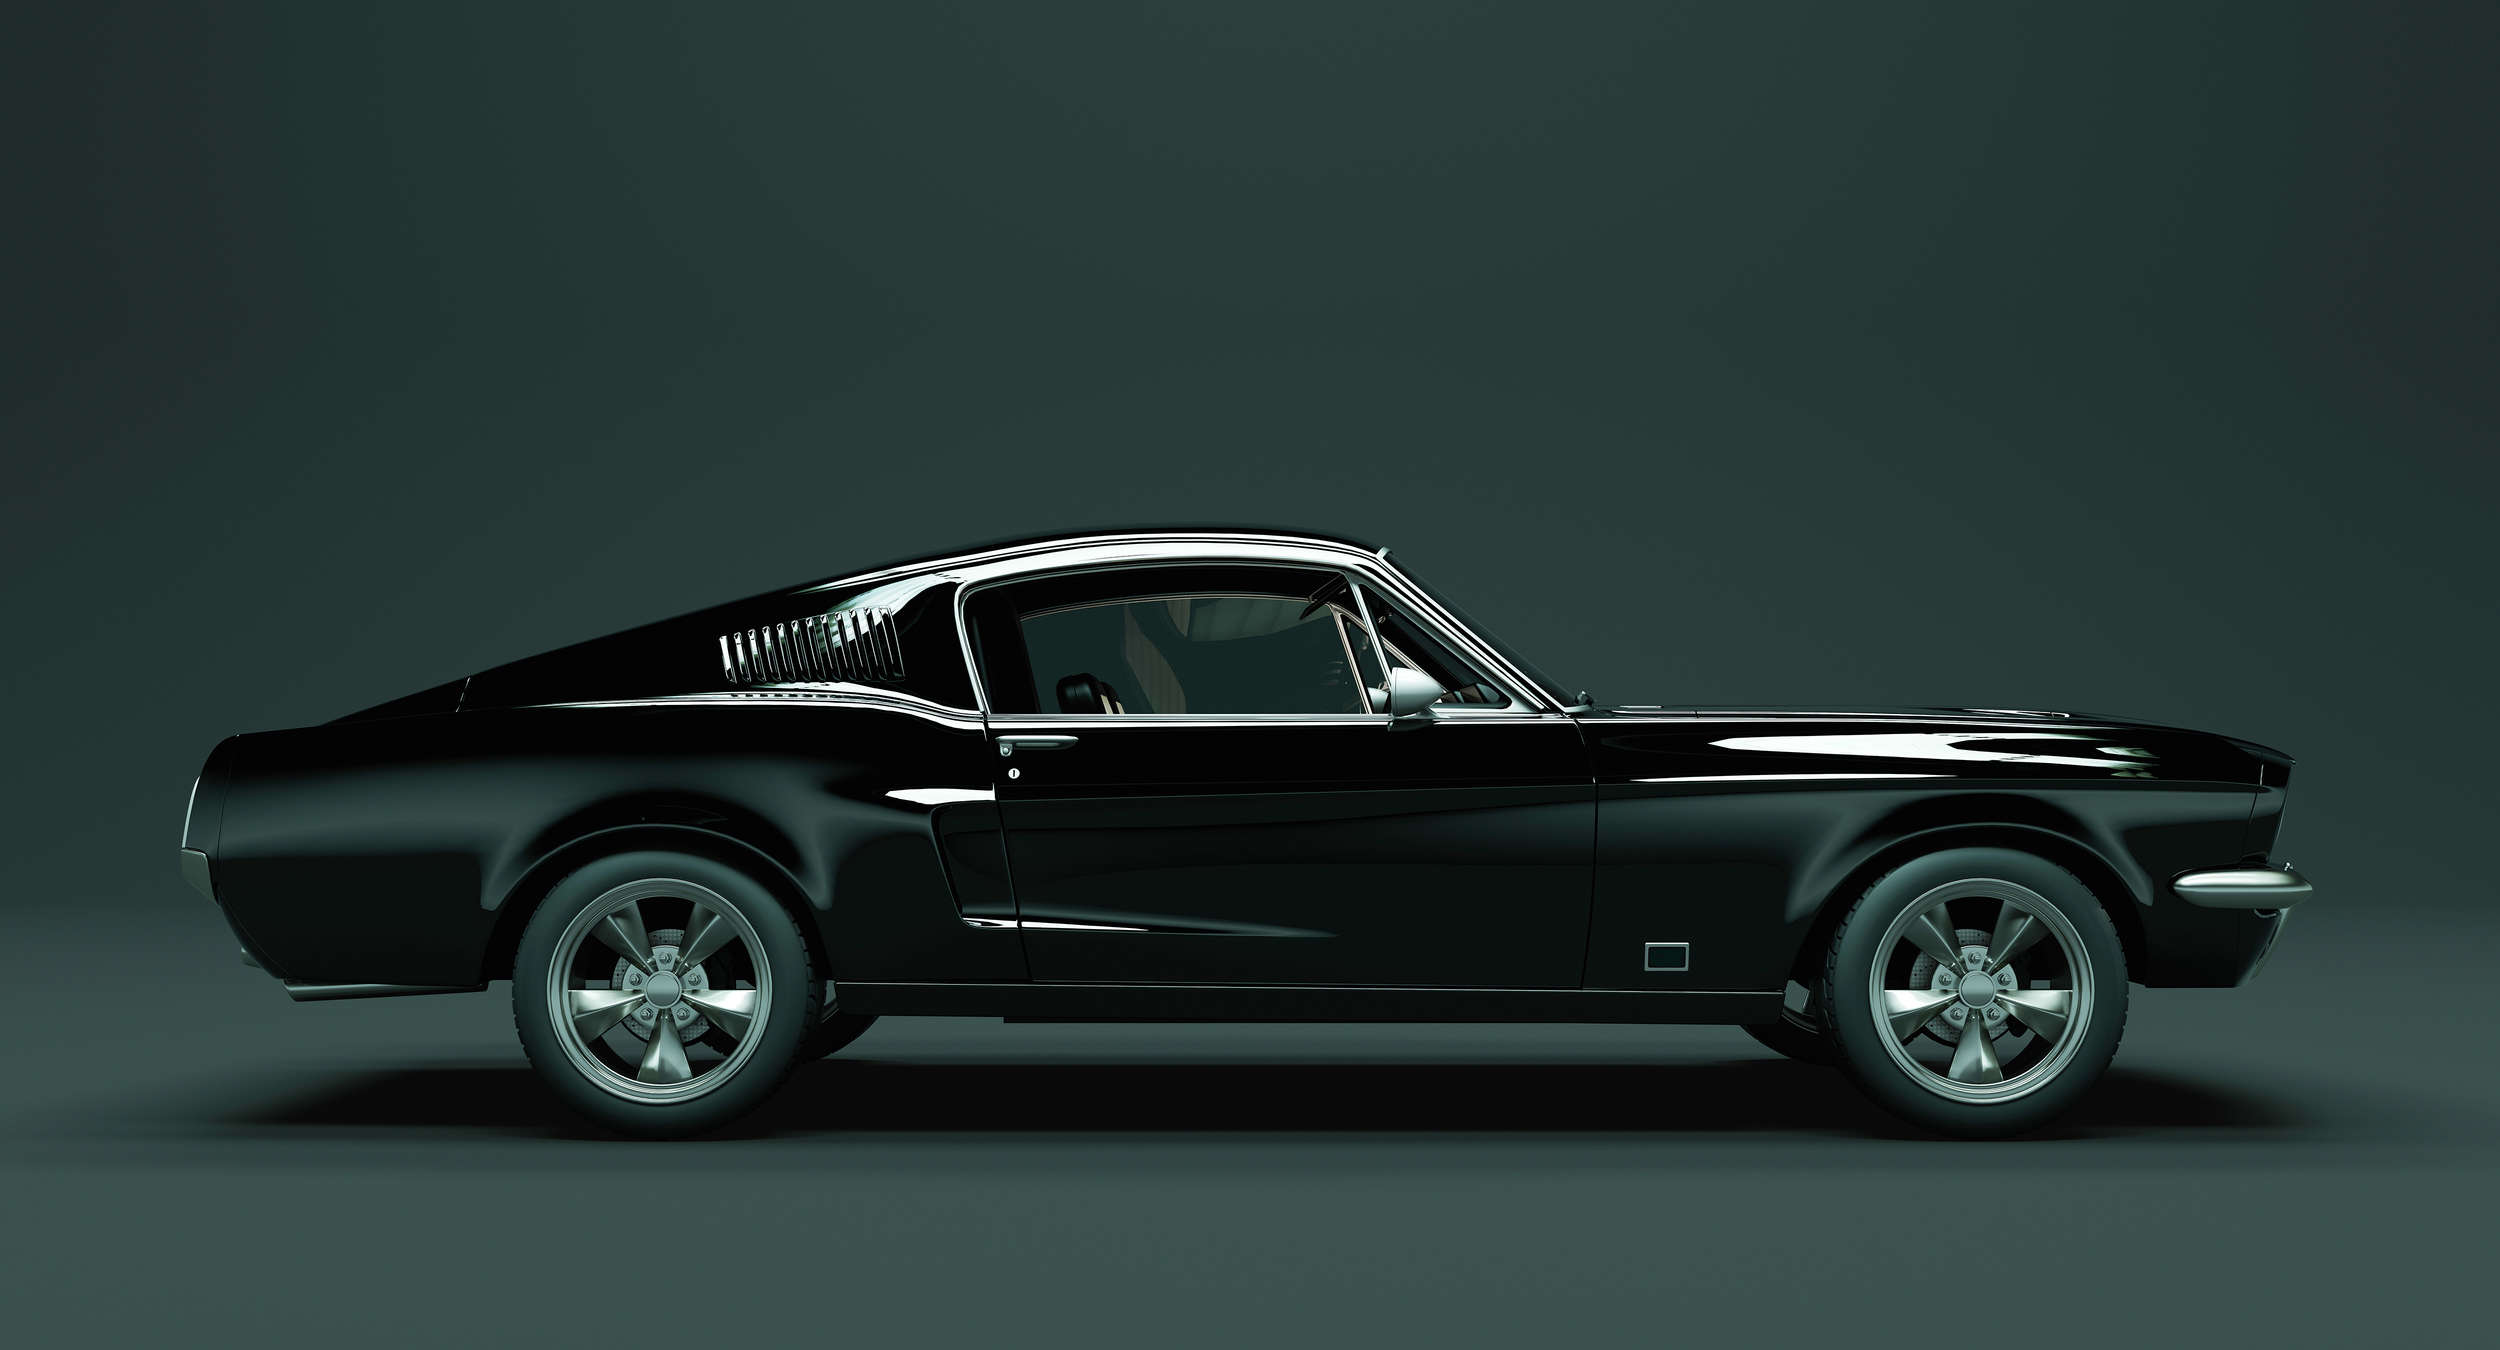             Mustang 1 - Fotomural, Mustang vista lateral, Vintage - Azul, Negro | Polar liso premium
        